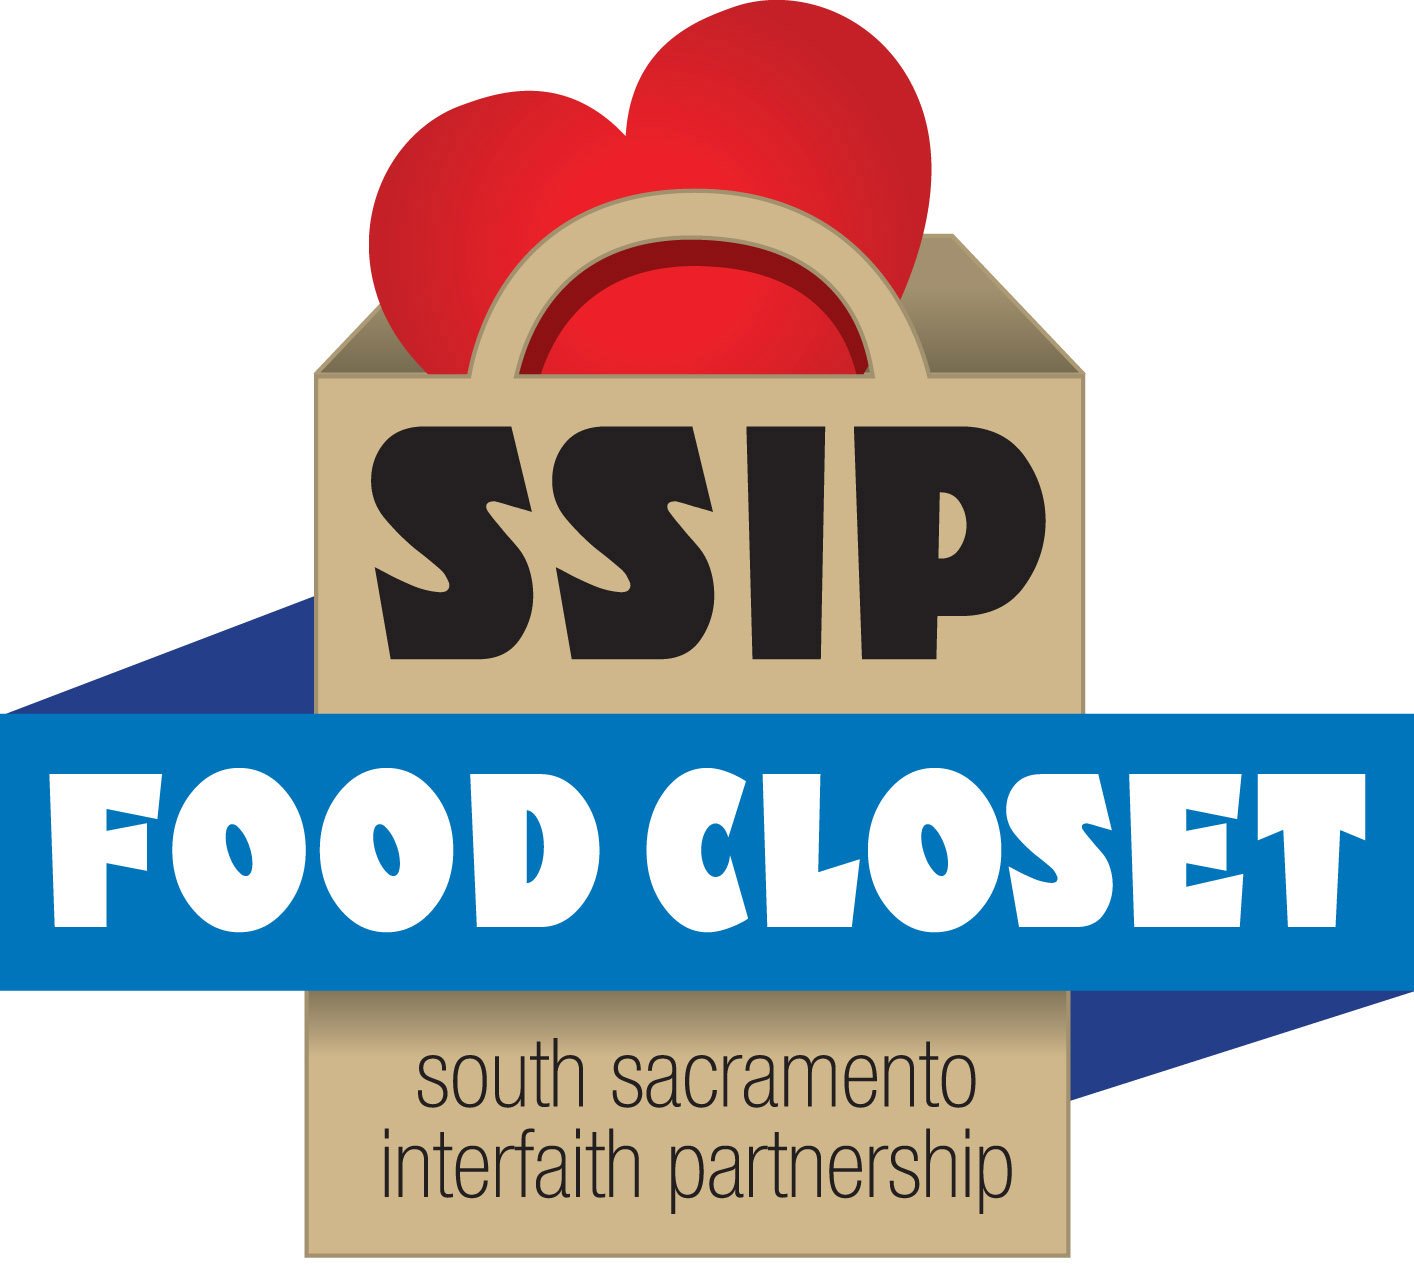 SSIP Food Closet